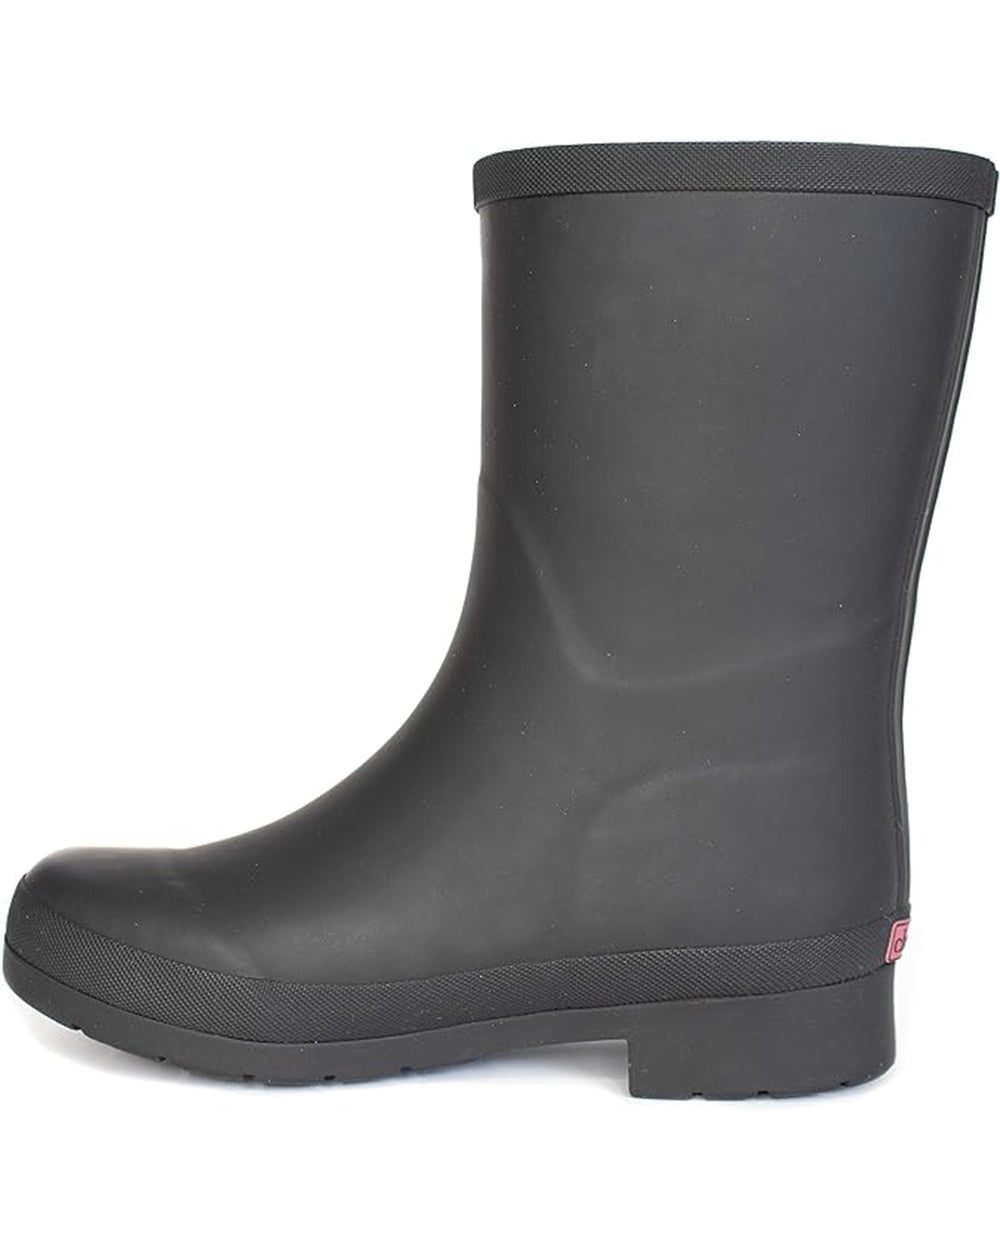 Chooka Delridge Mid Rain Boots UK 5 US 7